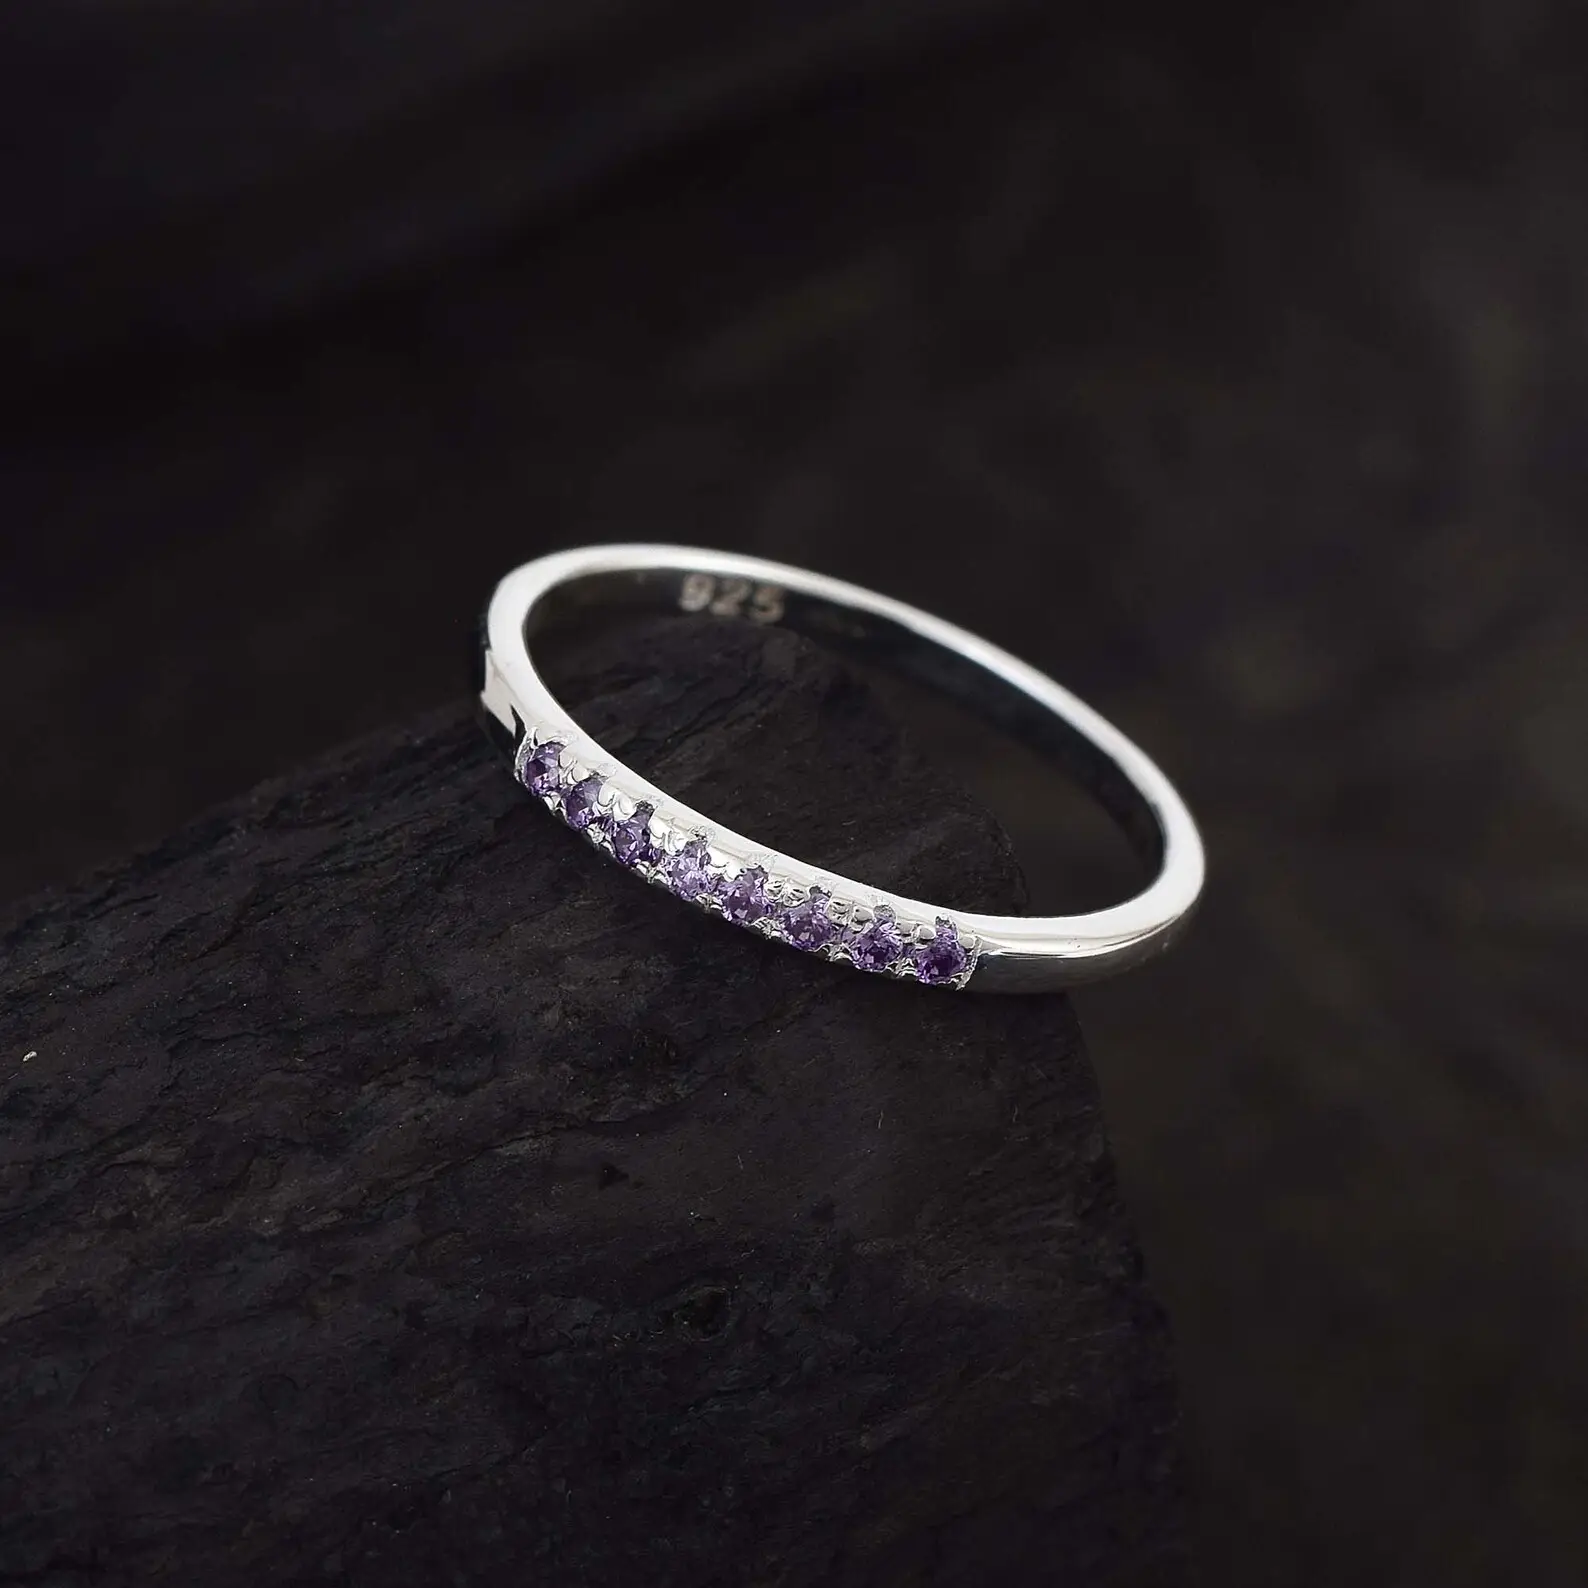 Klasik 925 perak murni buatan tangan alami ungu batu permata Amethyst perhiasan grosir pemasok Band keabadian cincin untuk wanita